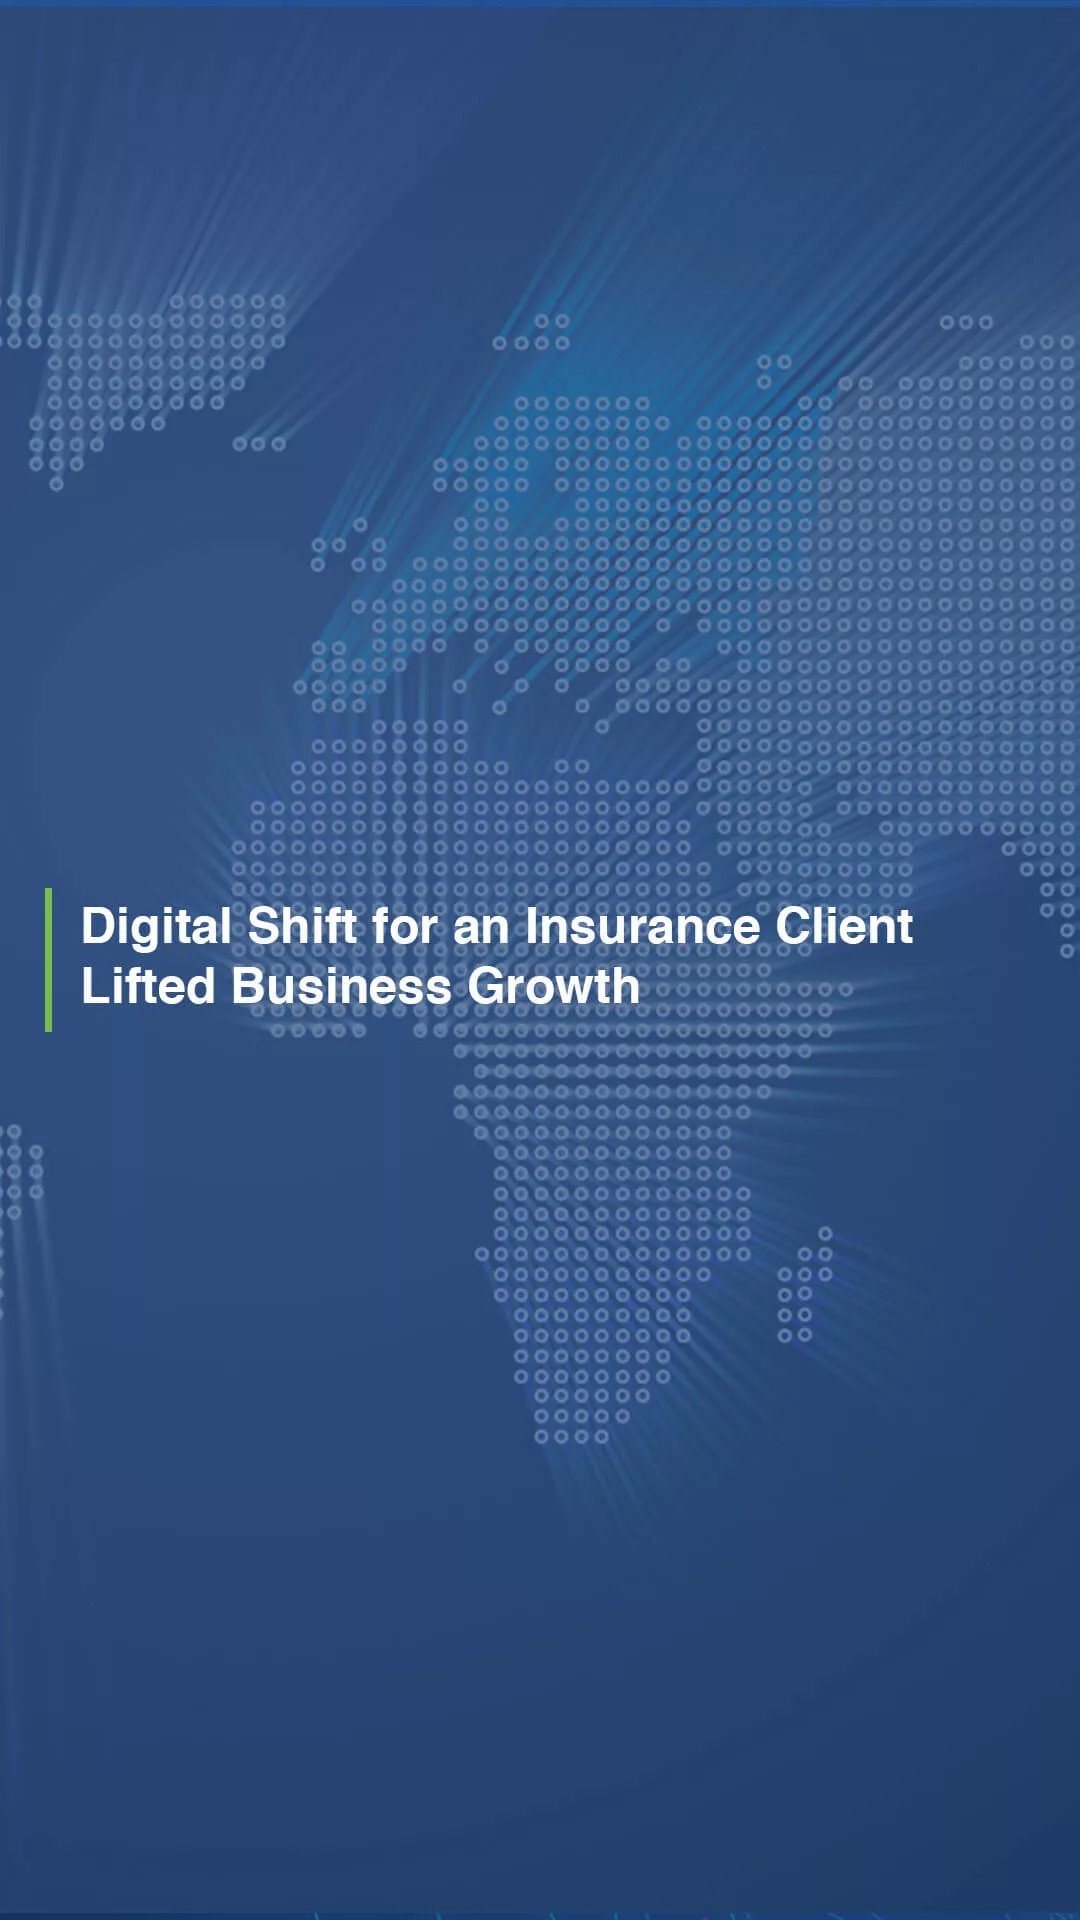 Digital Shift for an Insurance Client